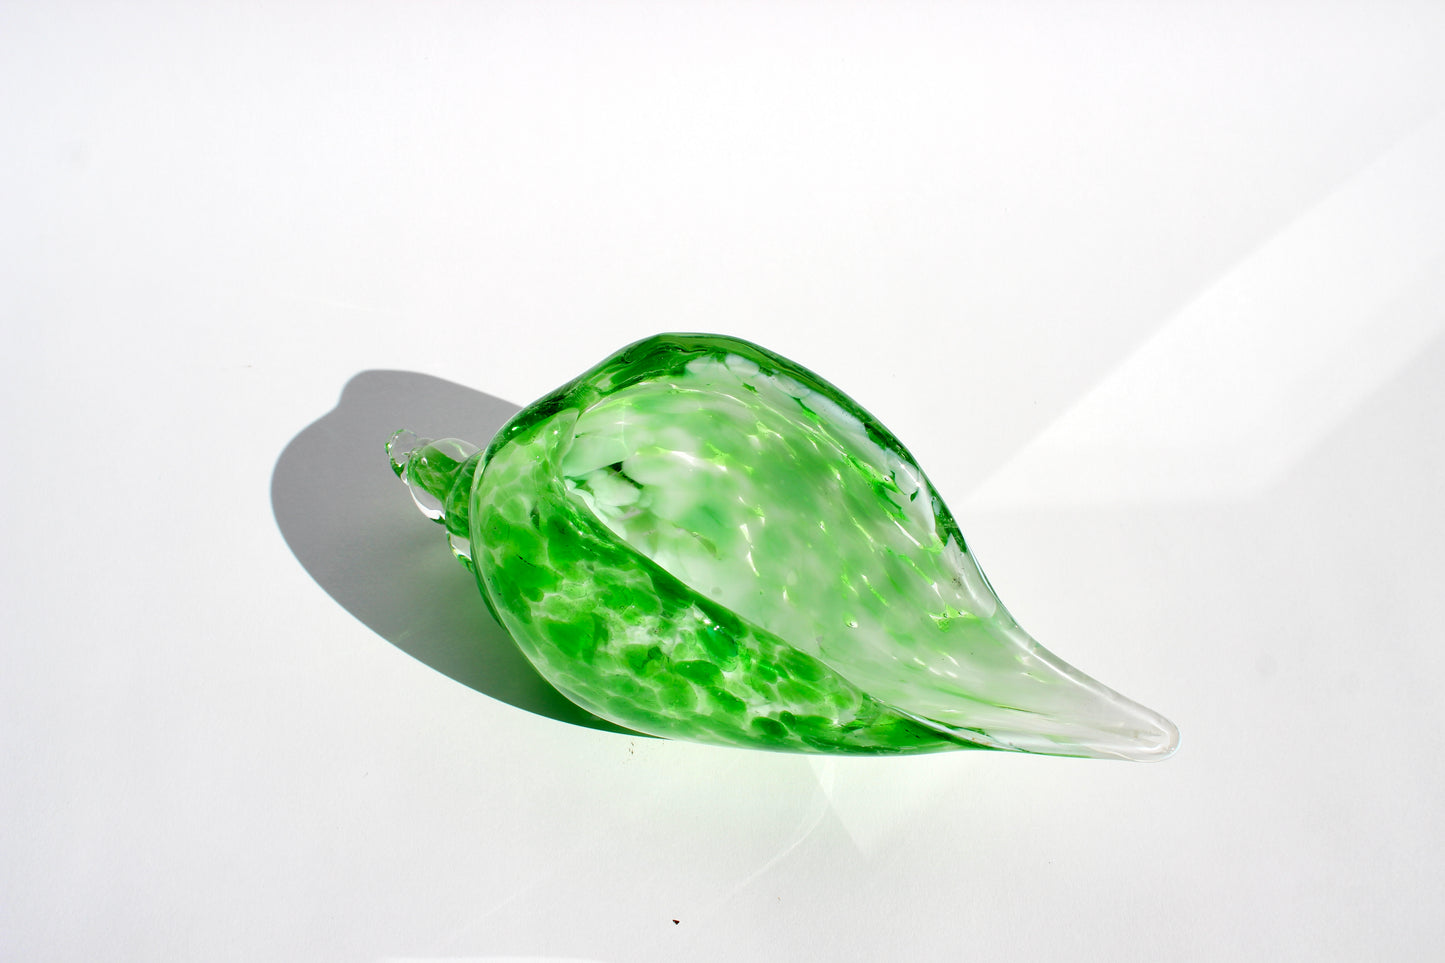 lime green italian seashell